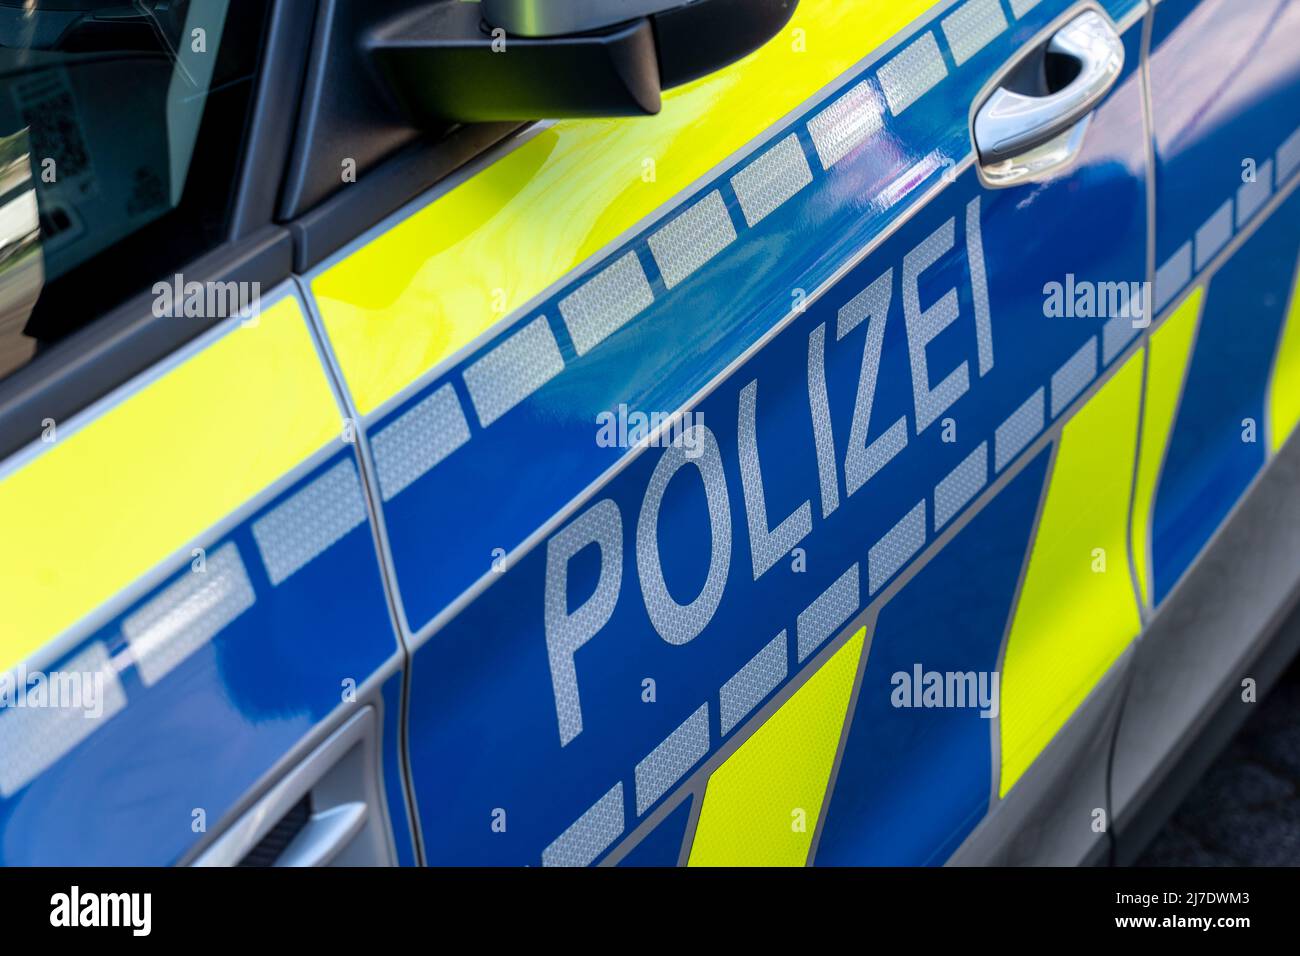 Police, police car, inscription on a patrol car, symbolic image, Stock Photo